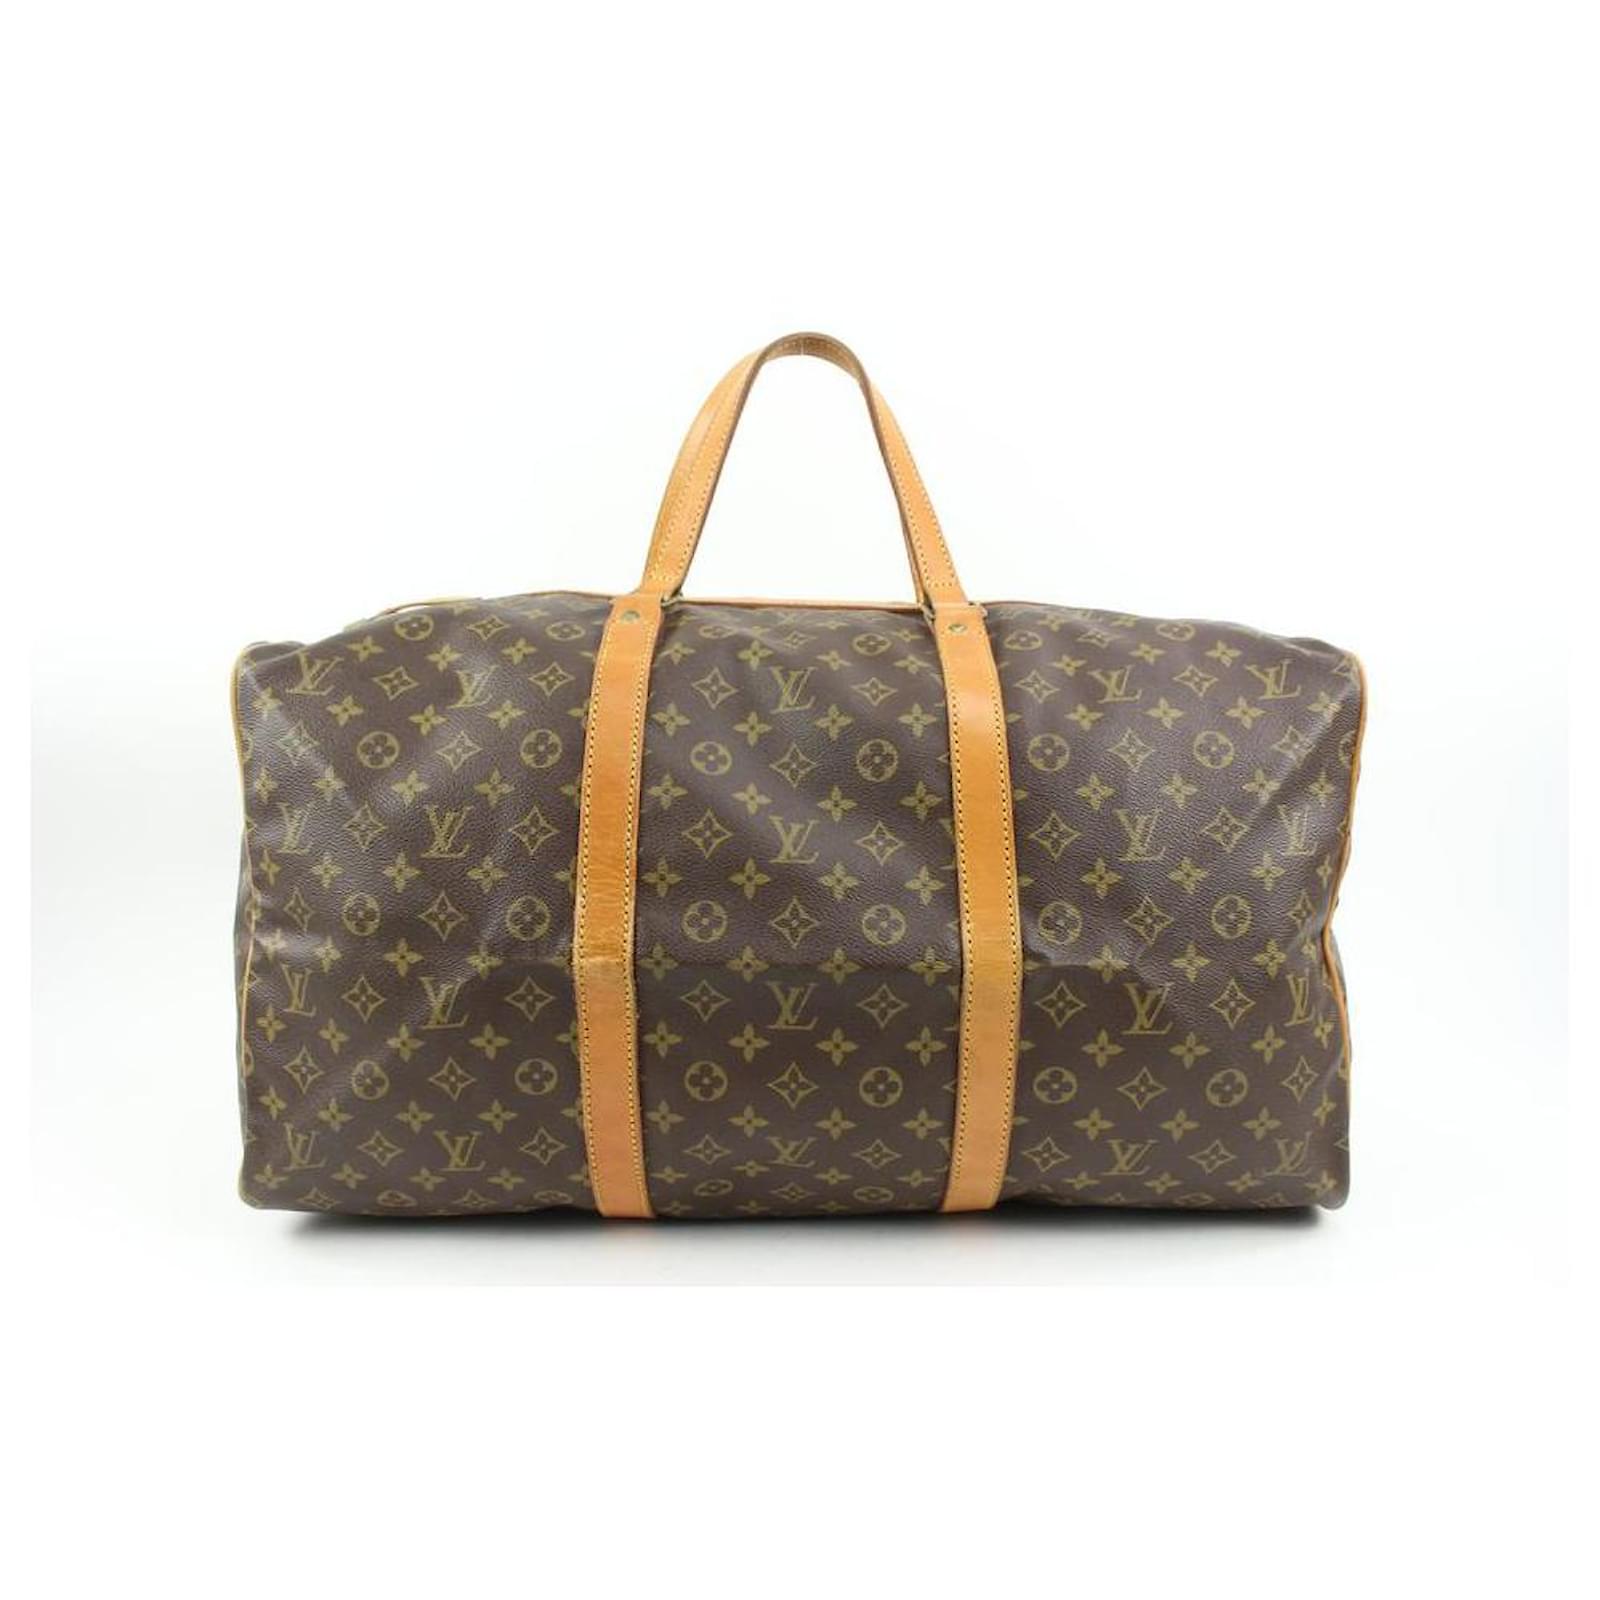 Louis Vuitton Discontinued Monogram Sac Souple 55 duffle bag